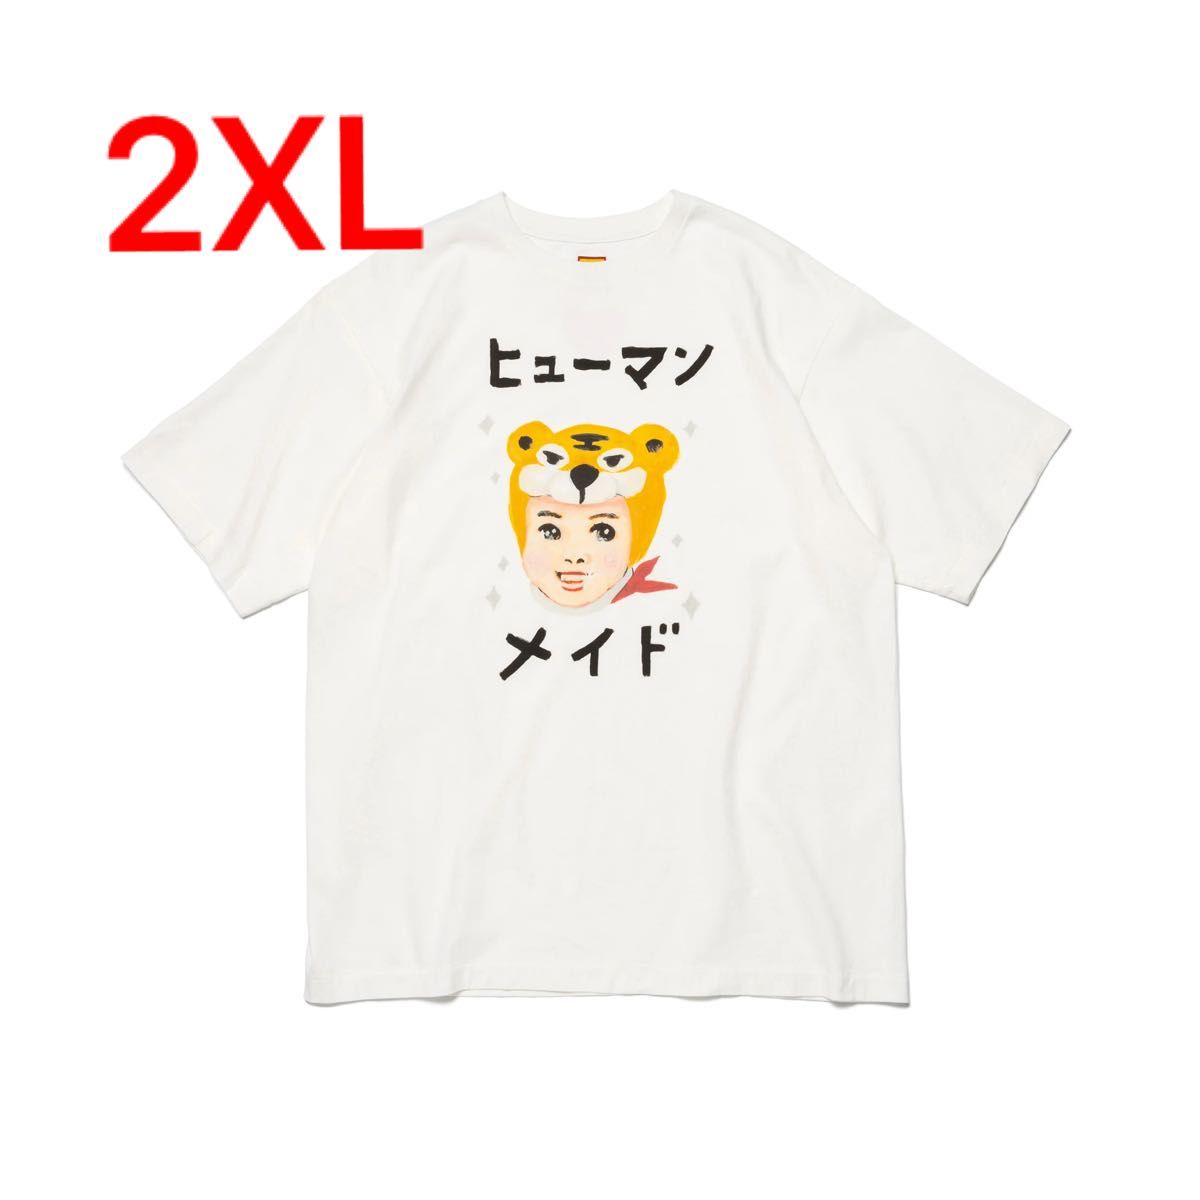 HUMAN MADE KEIKO SOOTOME T-SHIRT #8 ヒューマン メイド ケイコ ソオトメ Tシャツ